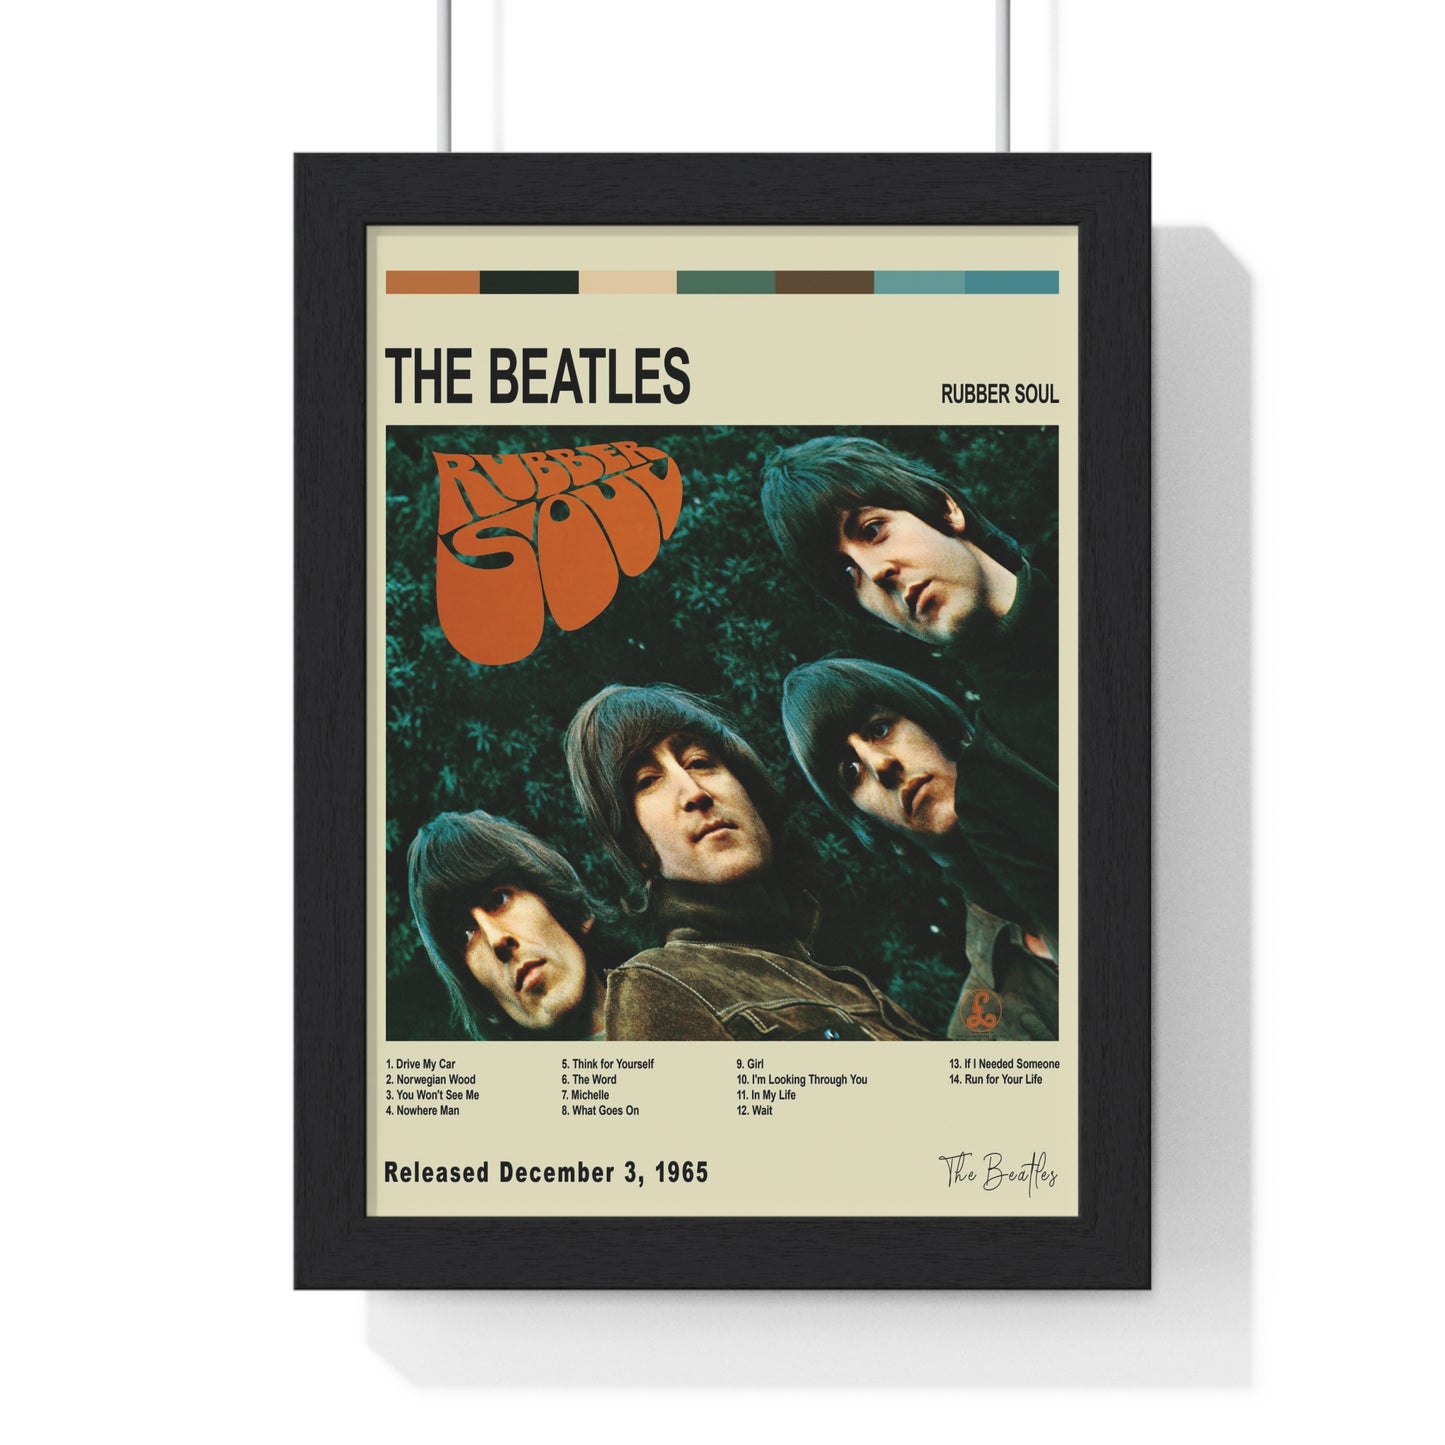 The Beatles - Album Poster